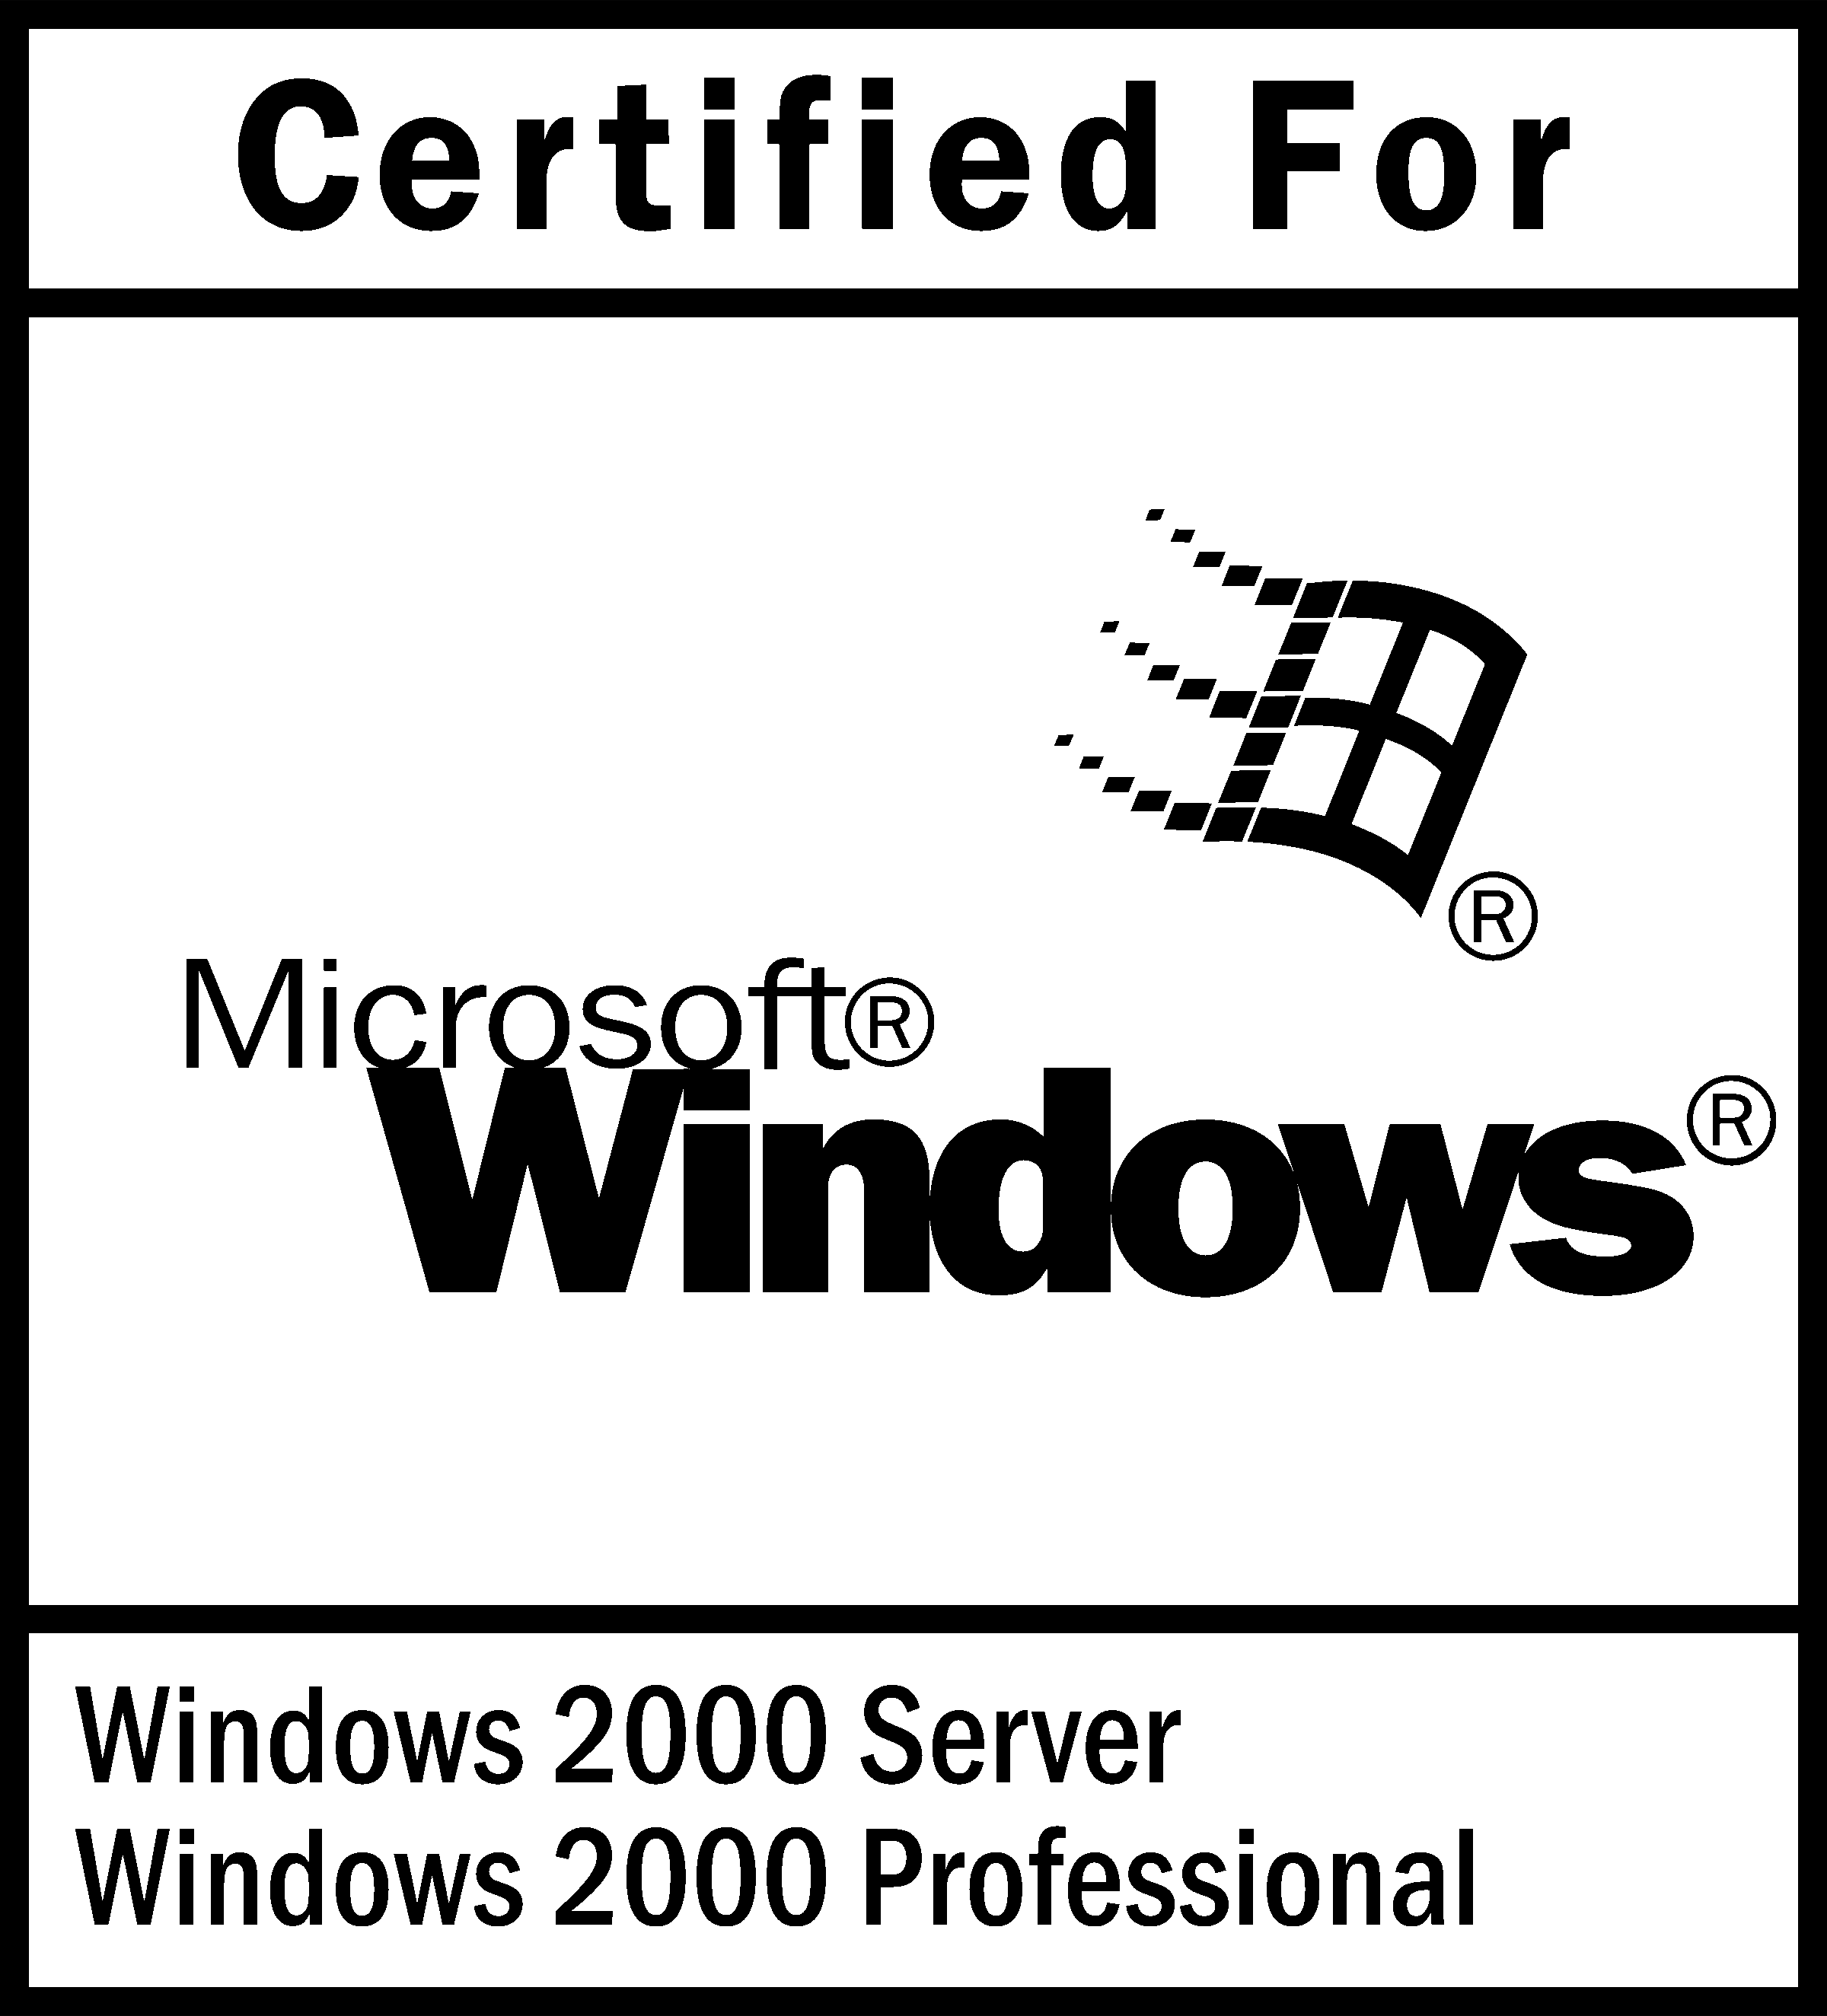 Windows 2000 Server Logo - Microsoft Windows 2000 Logo PNG Transparent & SVG Vector - Freebie ...